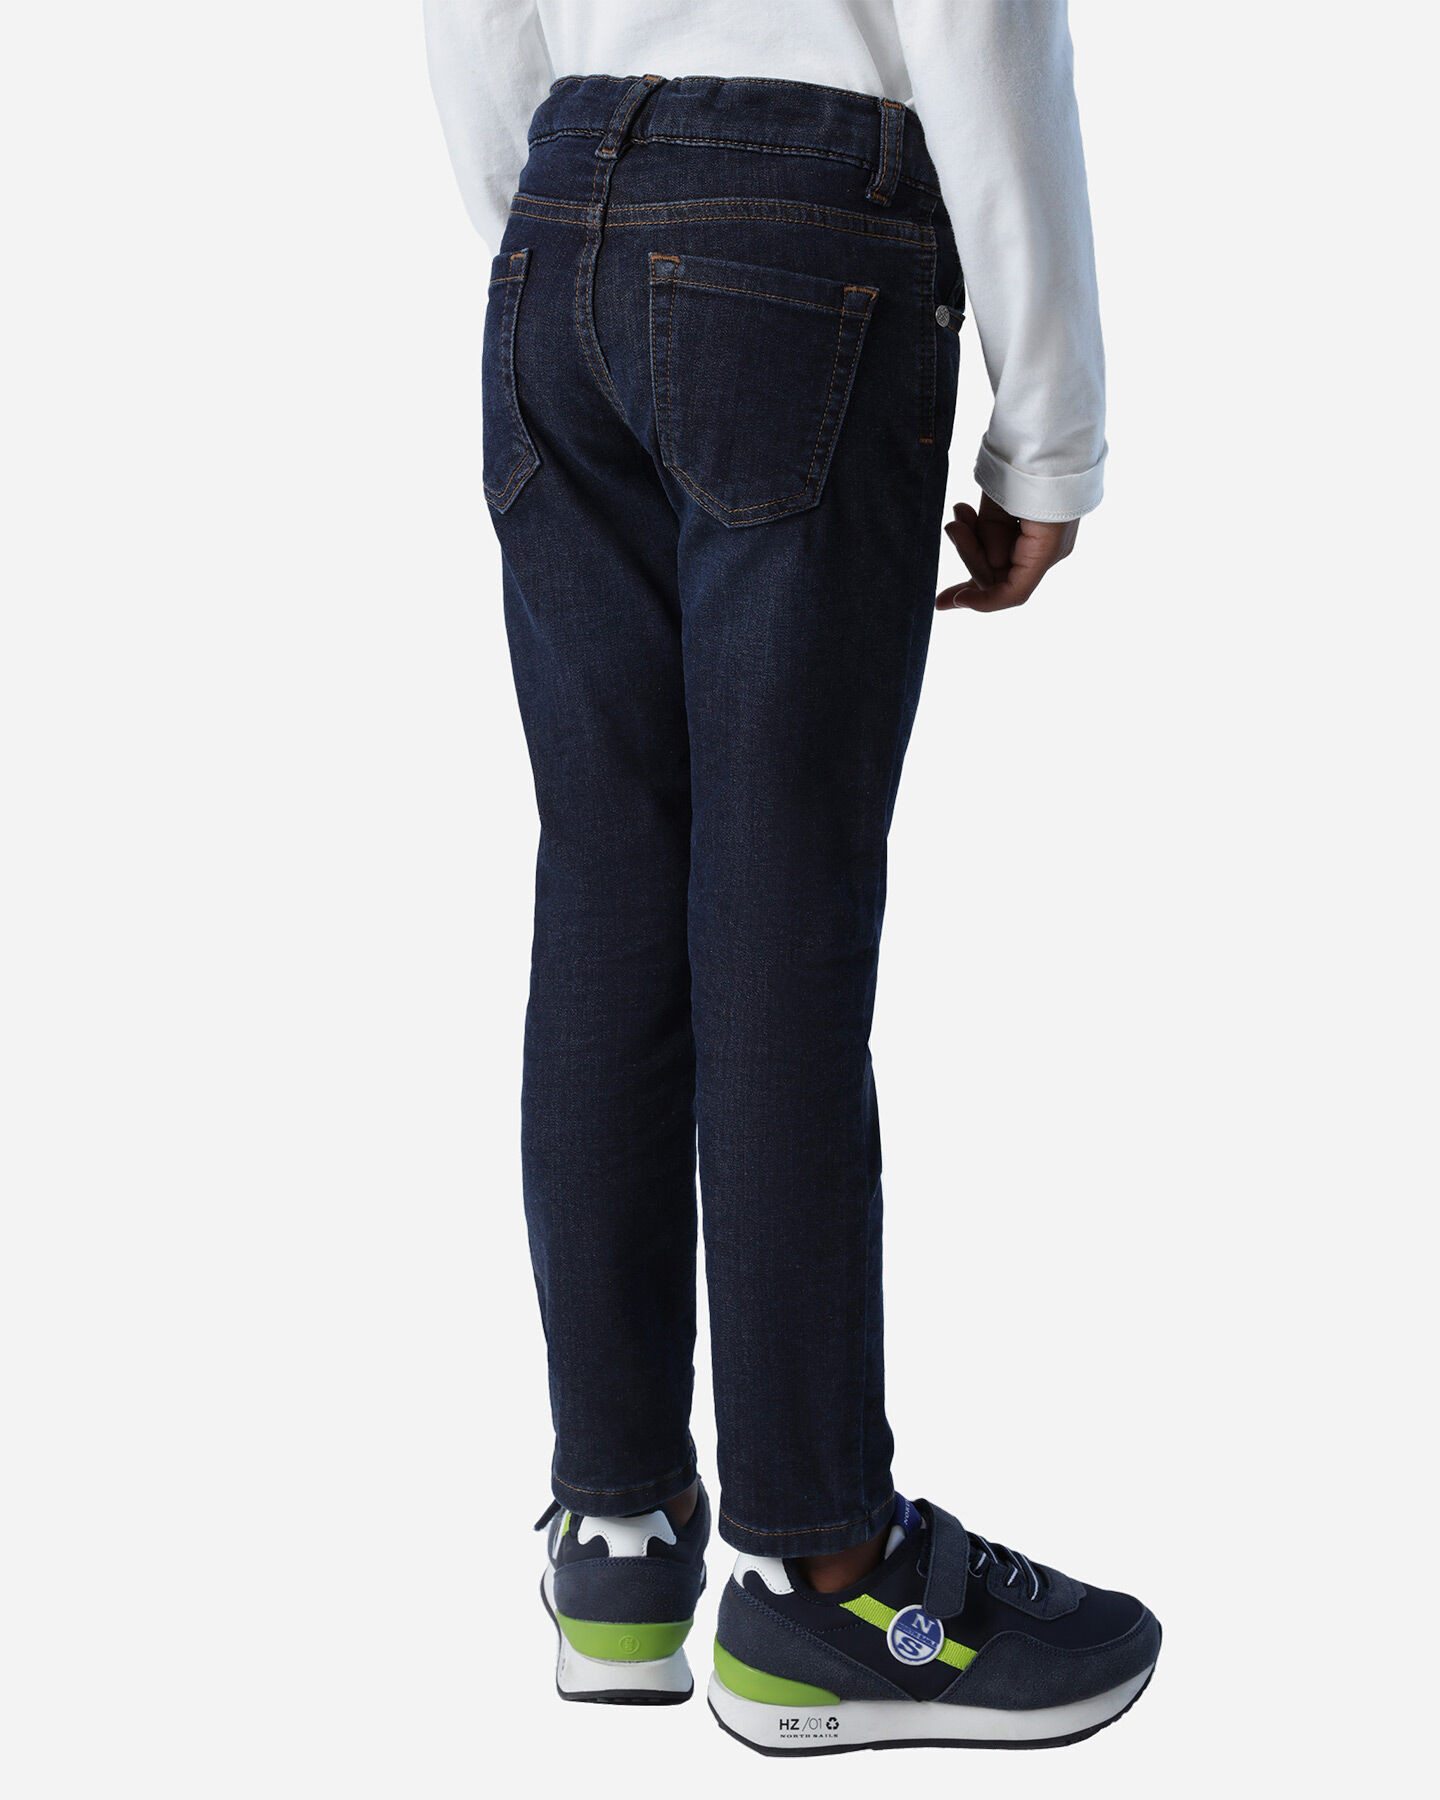  Jeans NORTH SAILS 5T FLEECE JR S4116361|C001|6 scatto 1